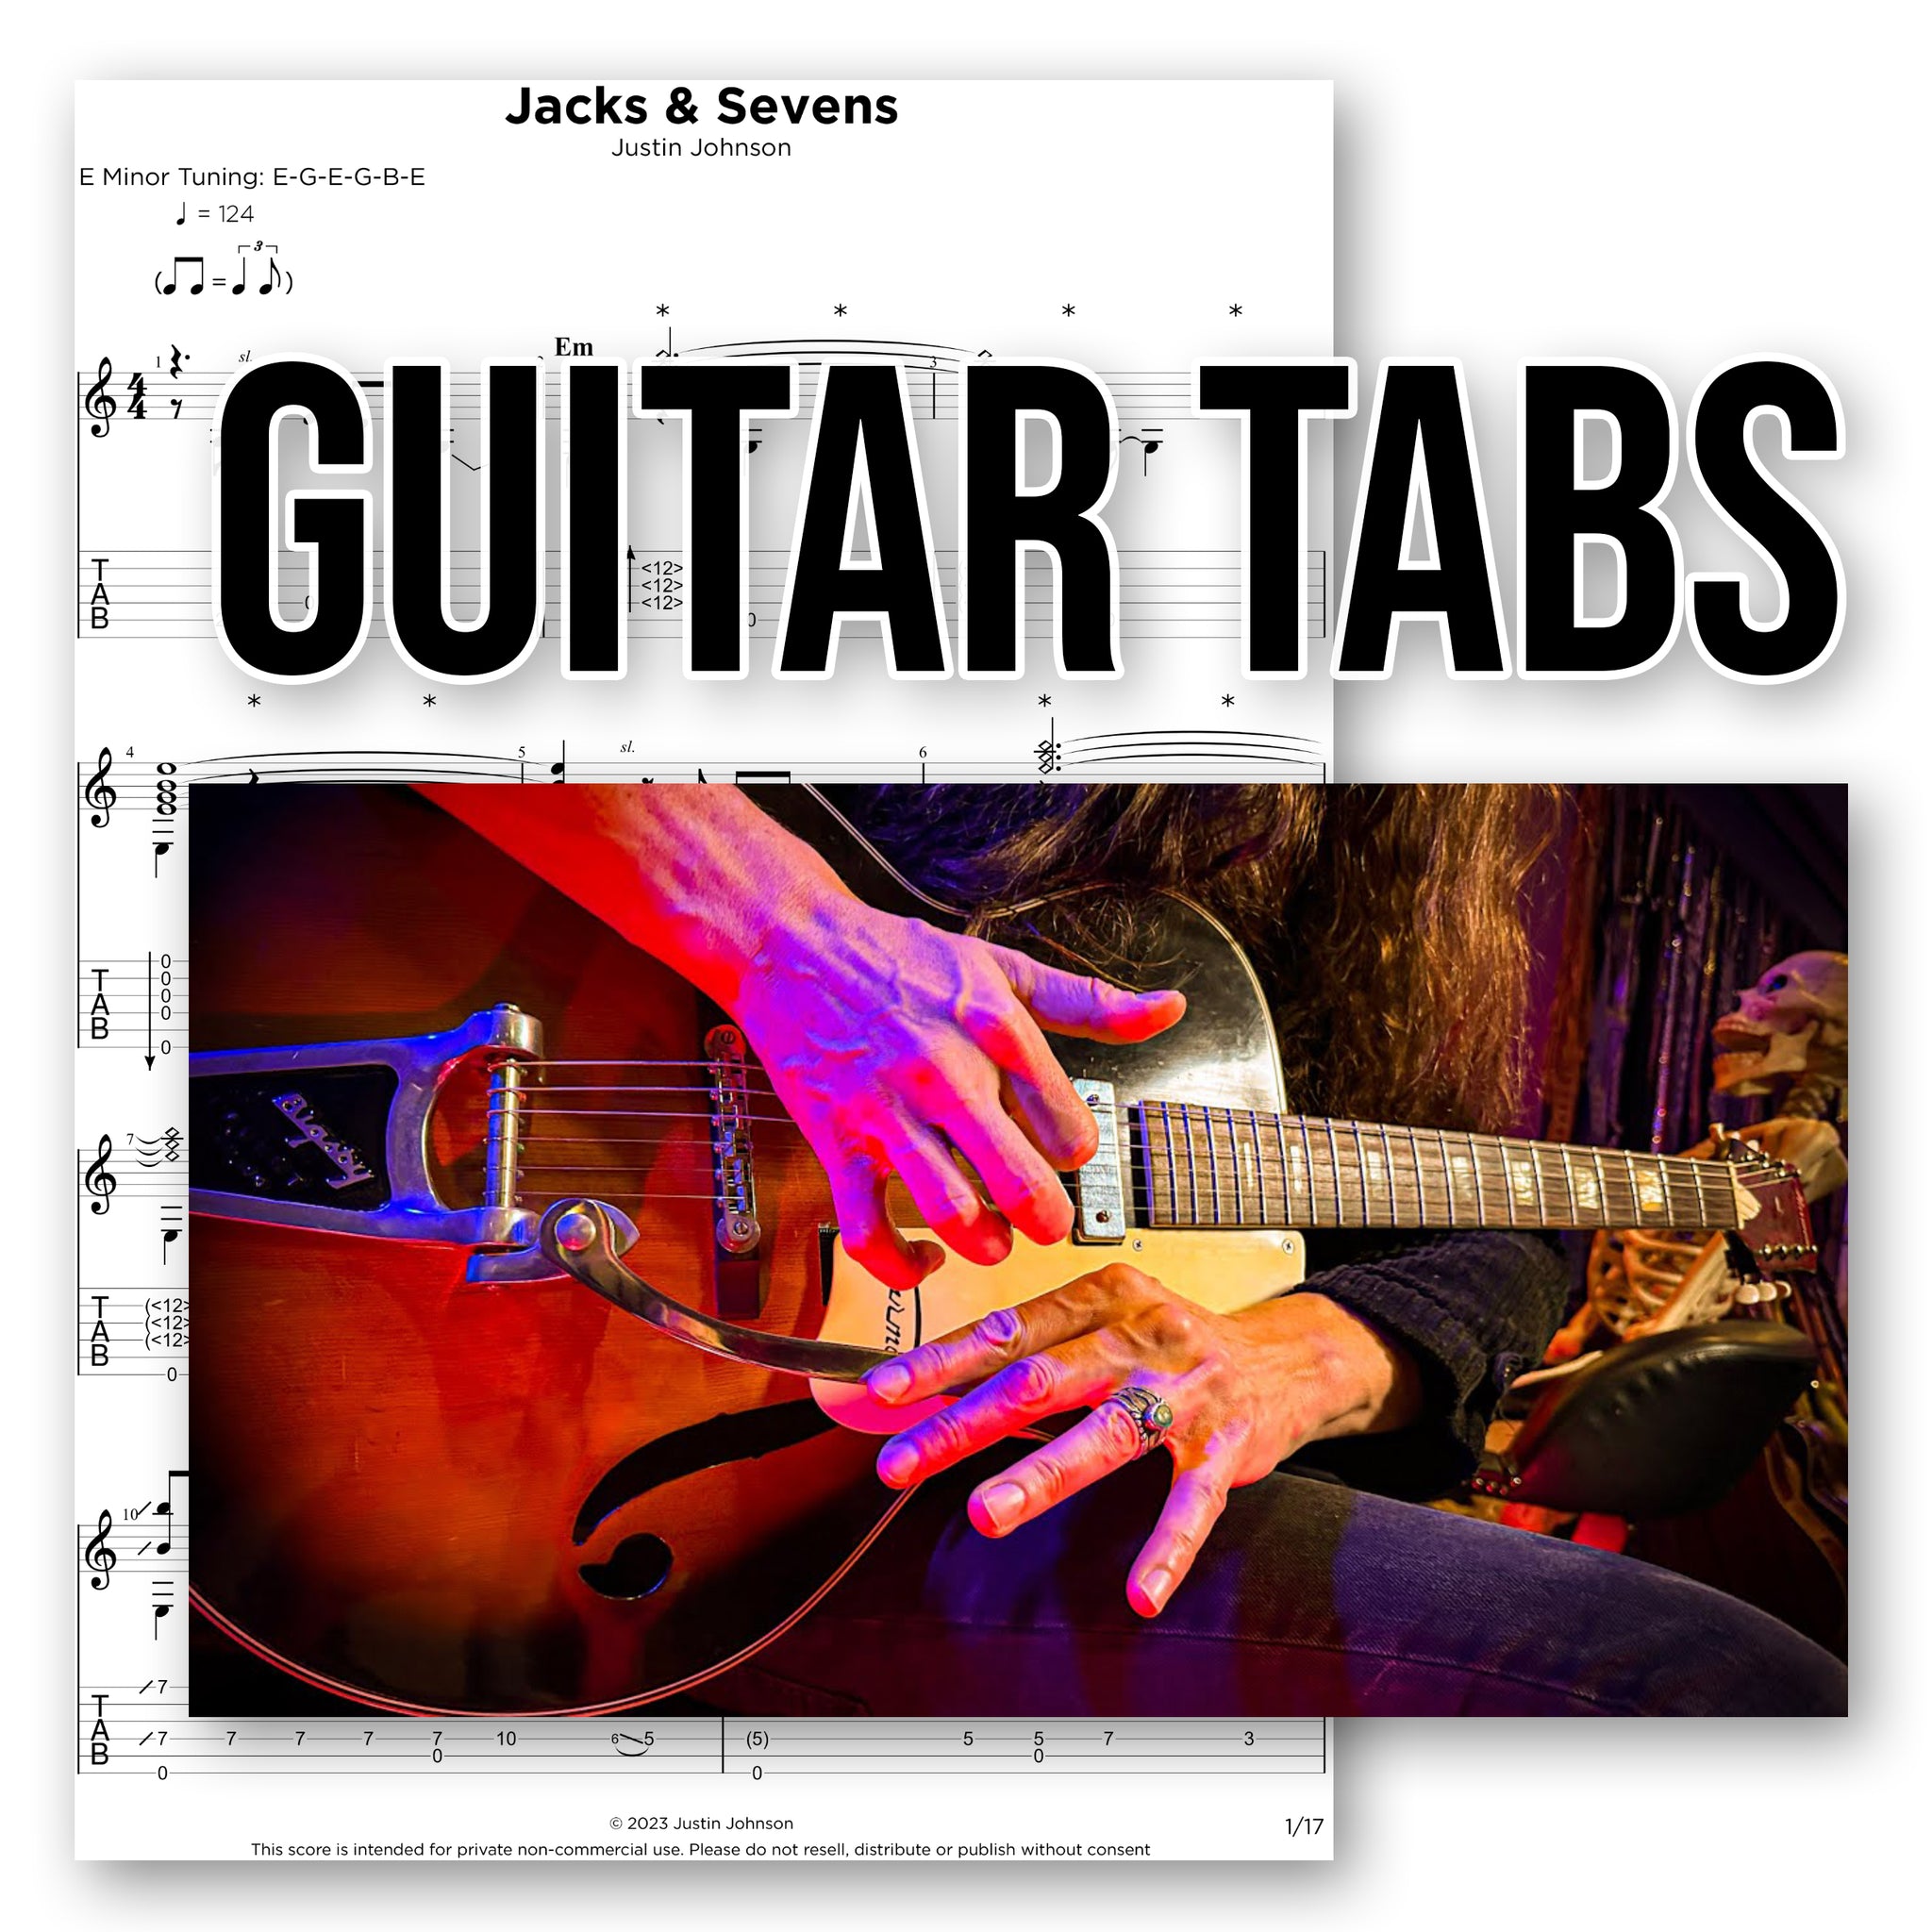 GUITAR TABS - "Jacks & Sevens"